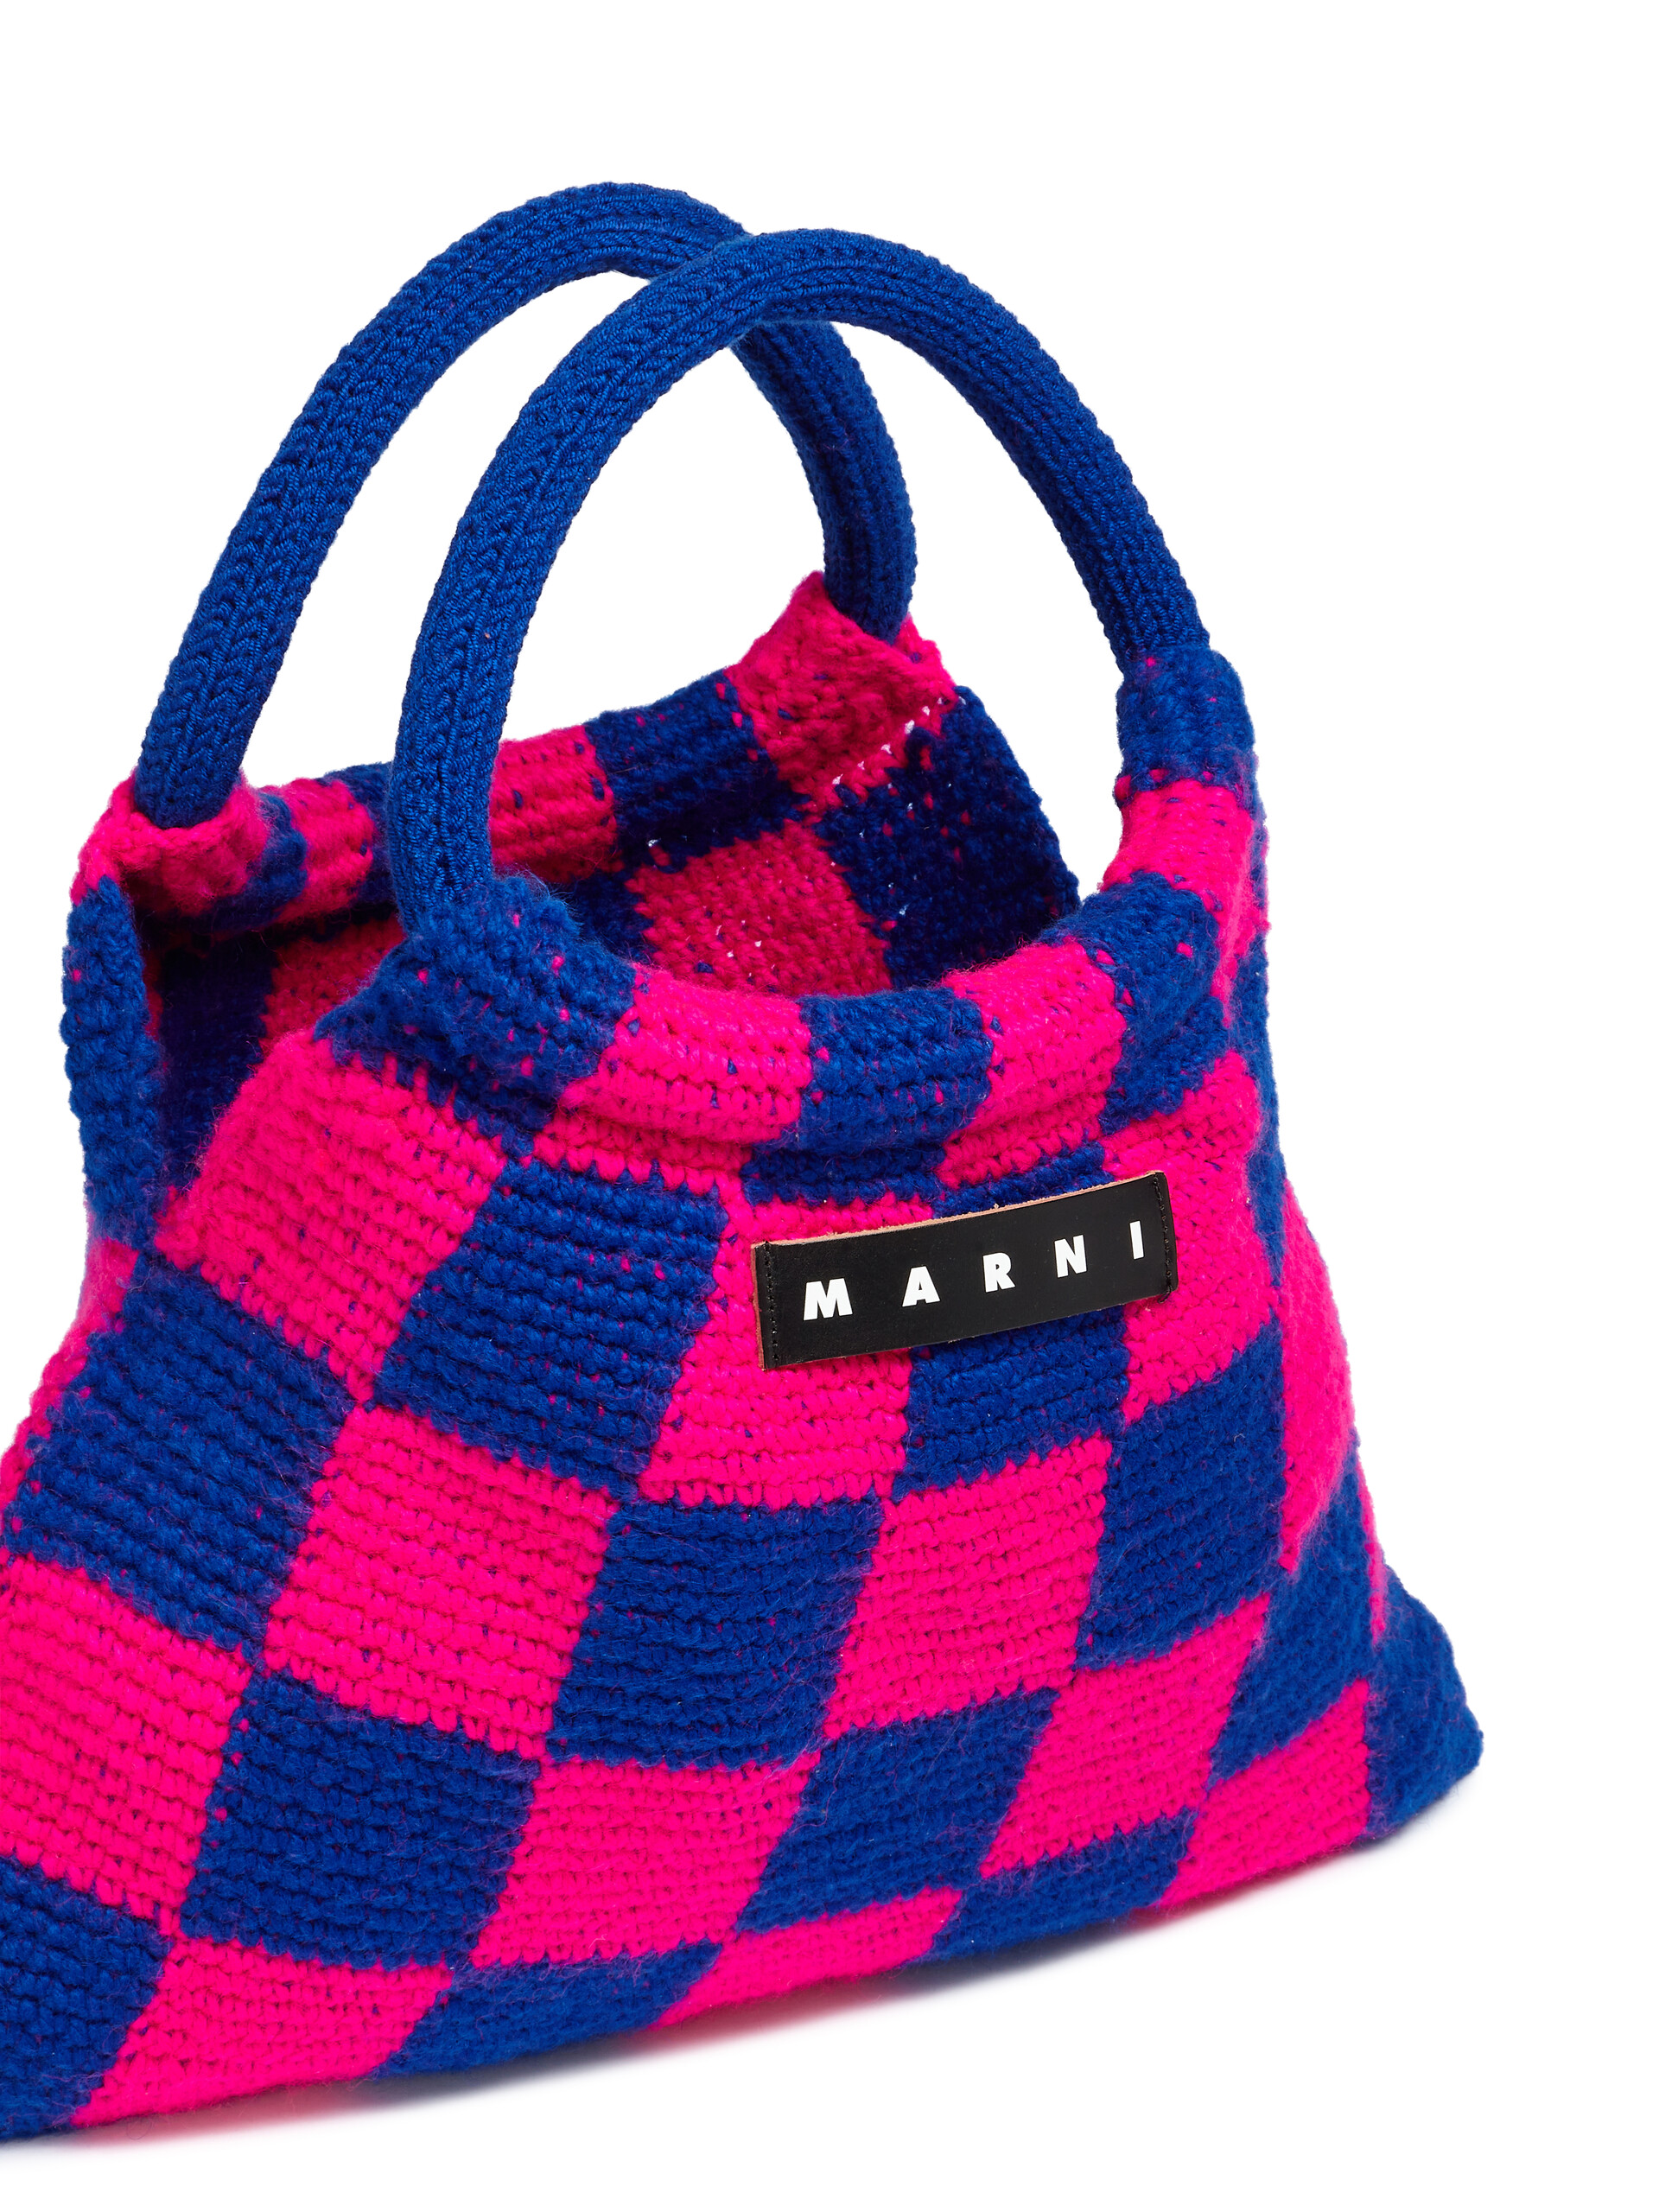 Borsa MARNI MARKET GRANNY in crochet rosa e blu - Borse shopping - Image 4